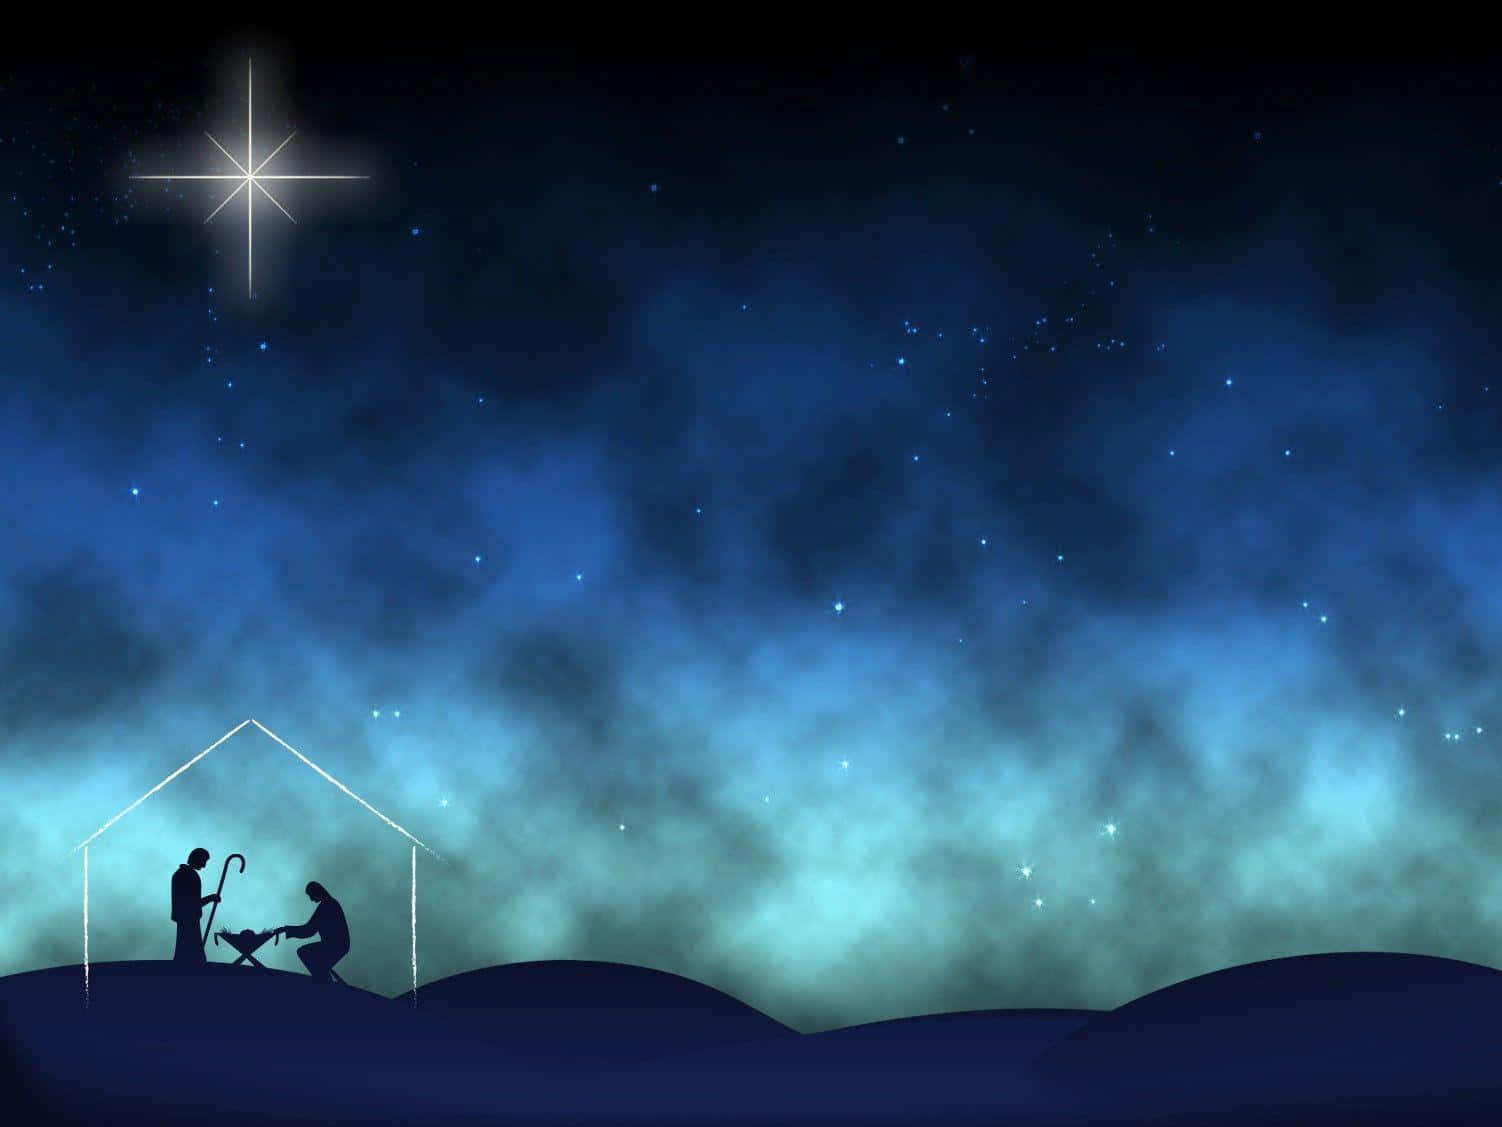 Christmas Nativity Invites us to Ponder the True Reason for the Season Wallpaper